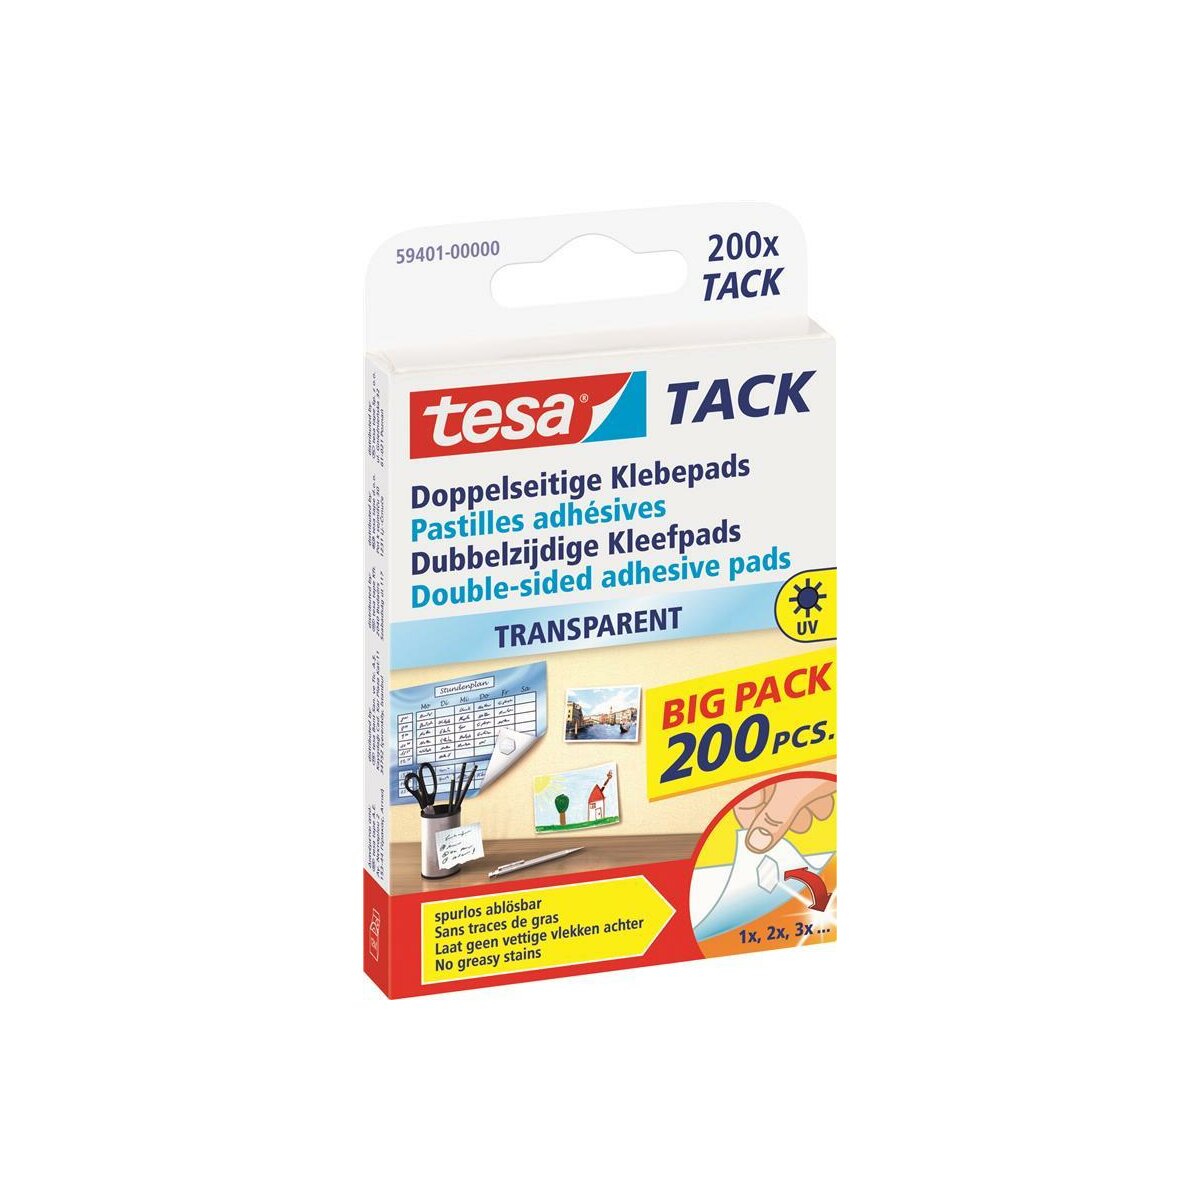 TESA 59401: tesa® TACK doppelseitige Klebepads, 200 Stück bei